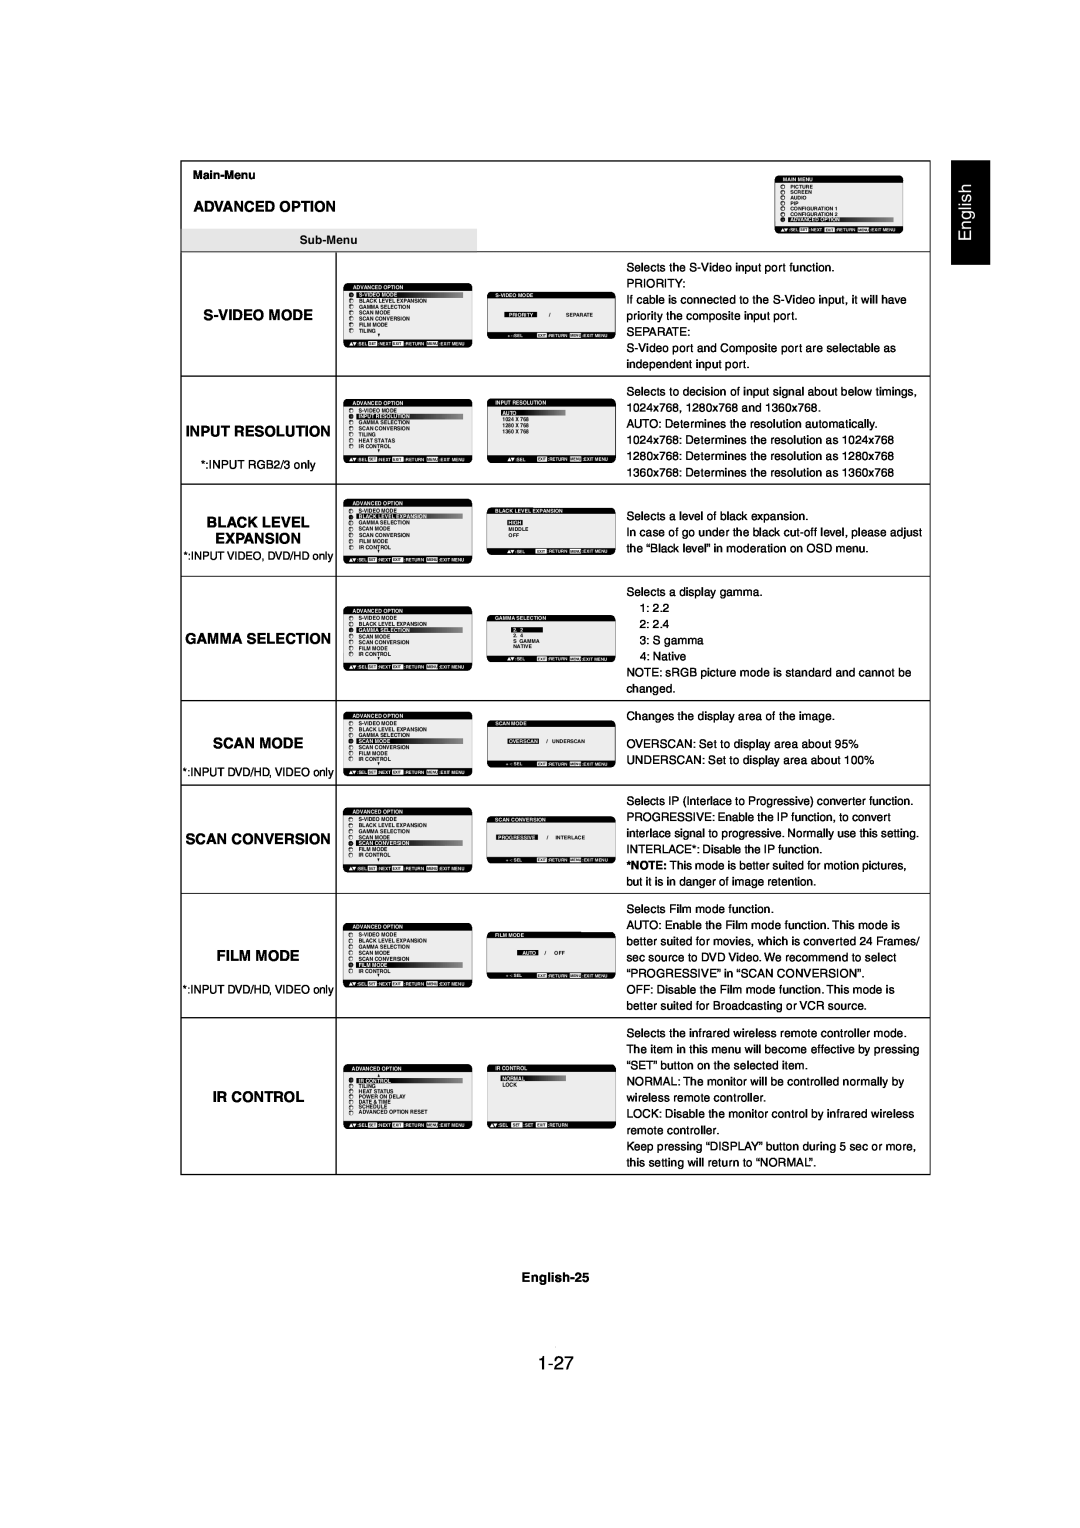 Mitsubishi Electronics MDT321S user manual 1-27, English, Advanced Option 